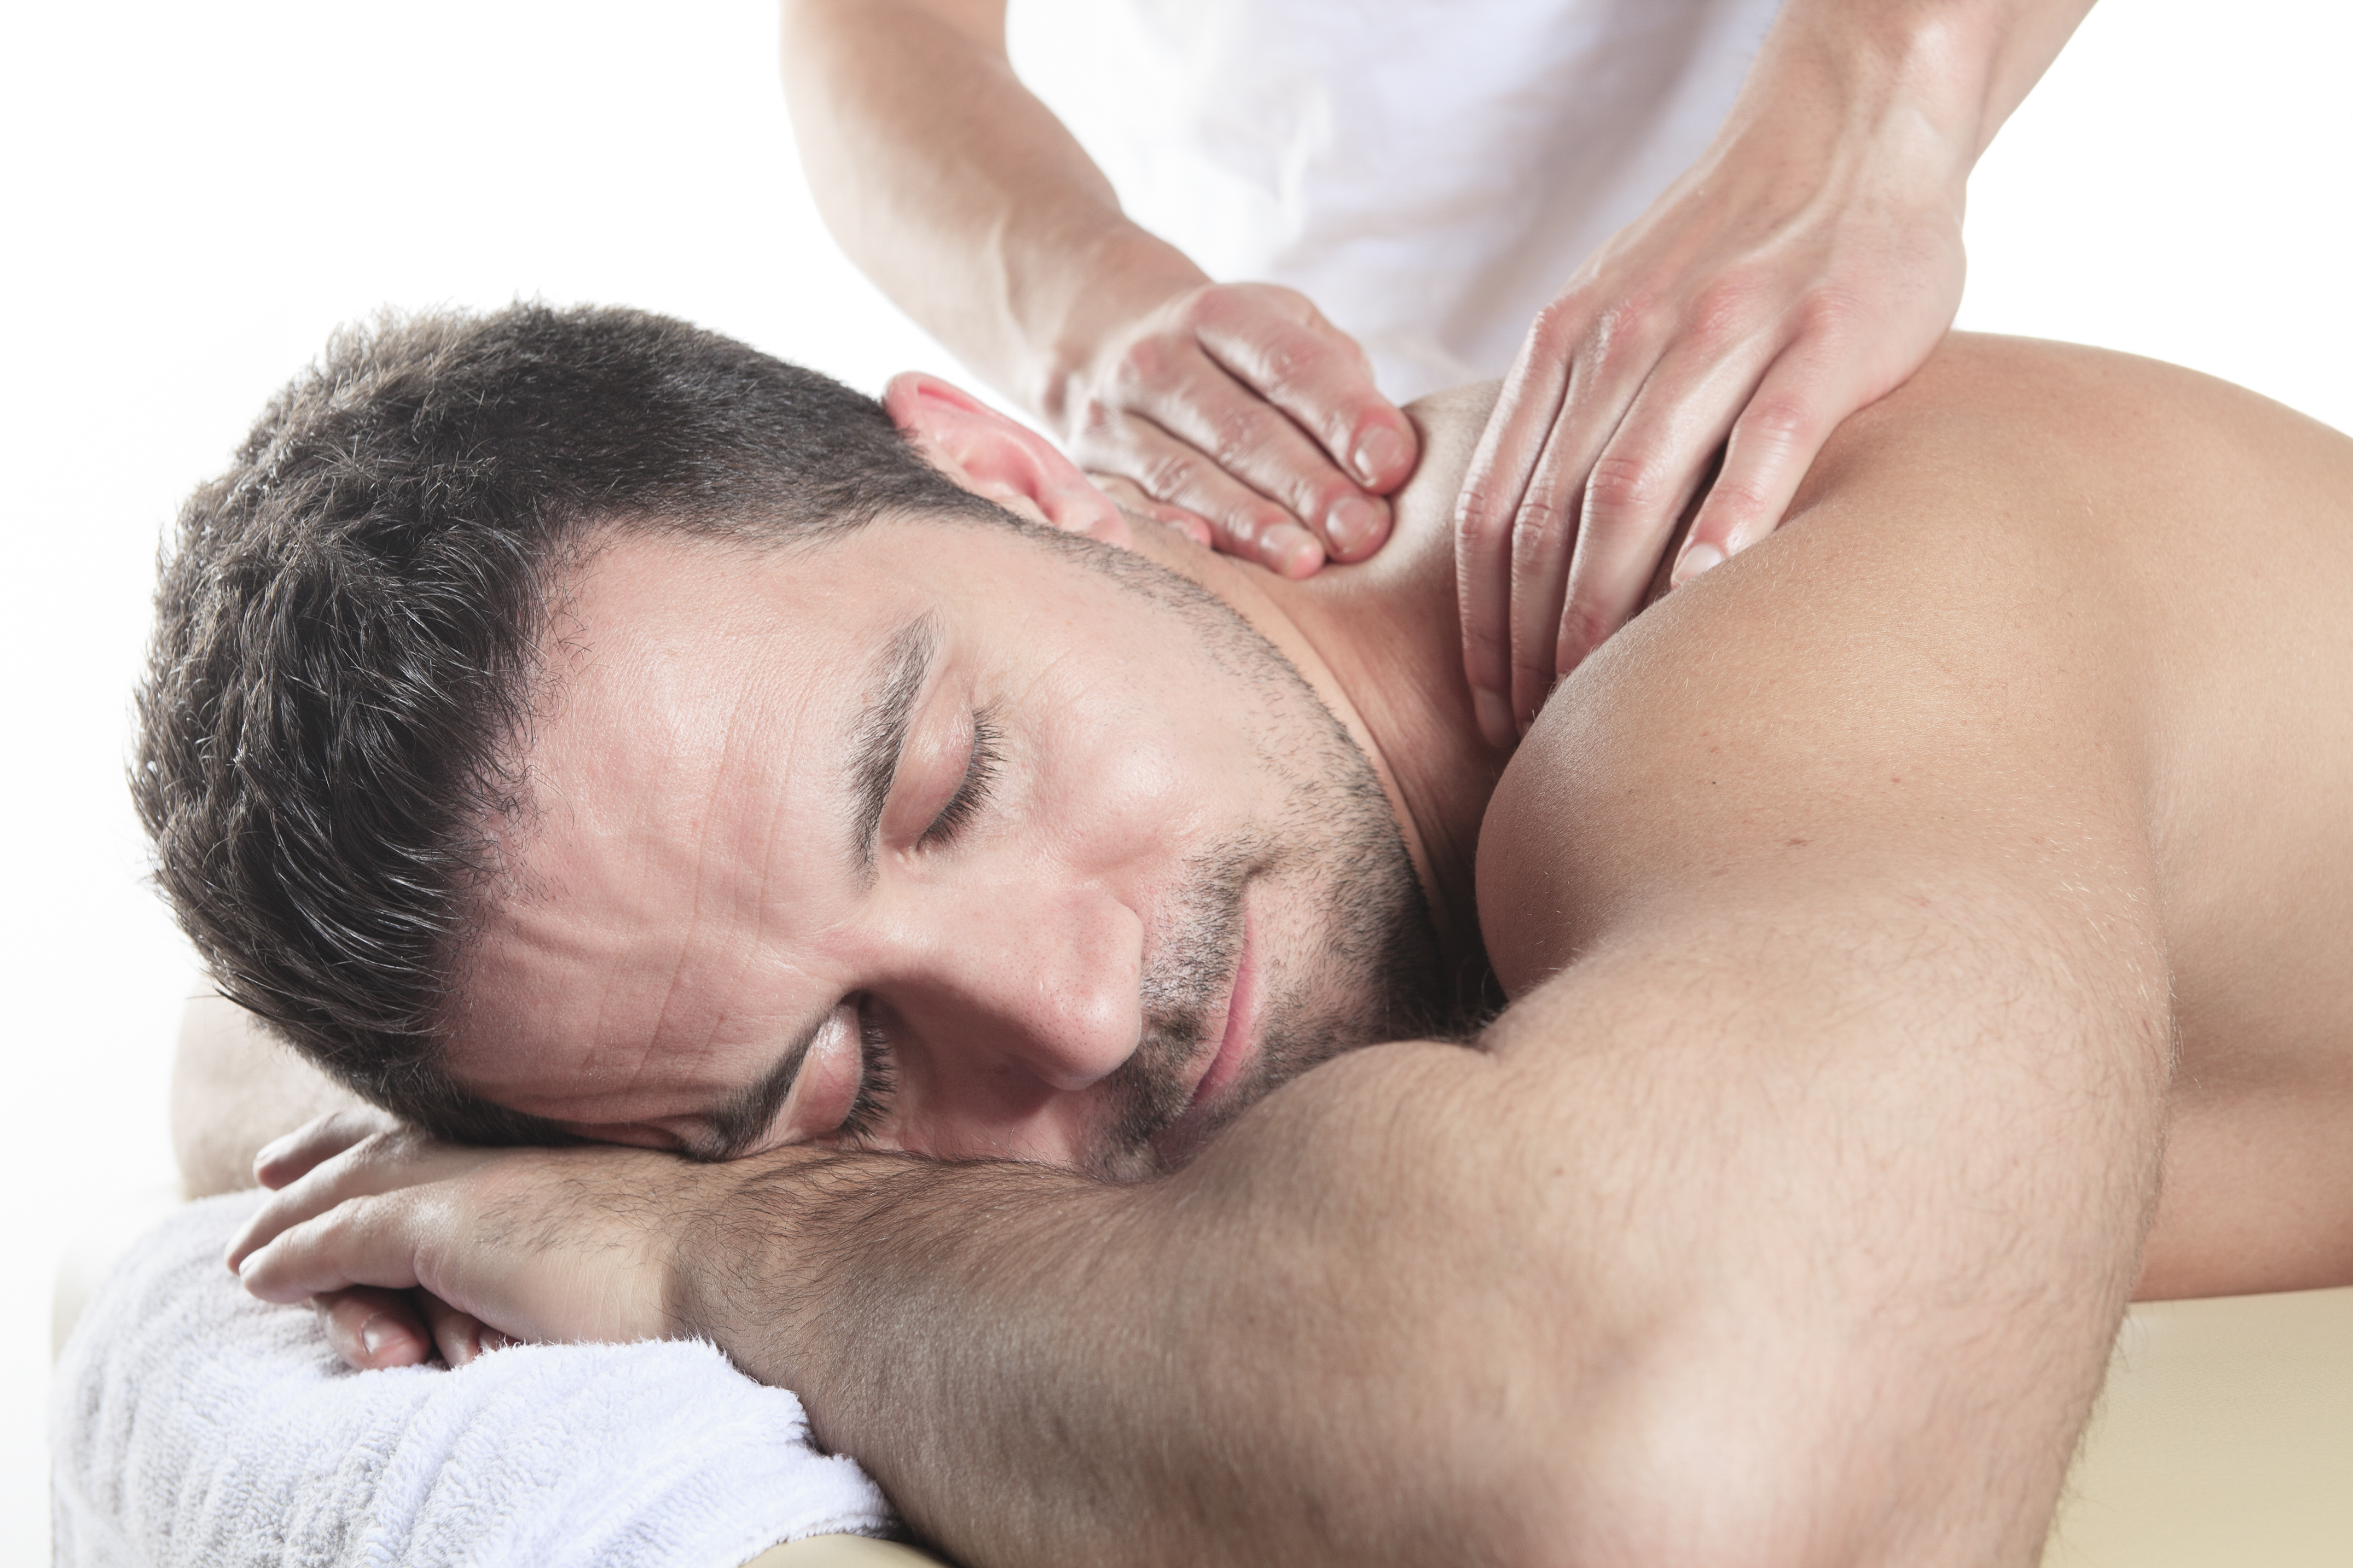 Man receiving Shiatsu massage from a professional masseur at spa salon